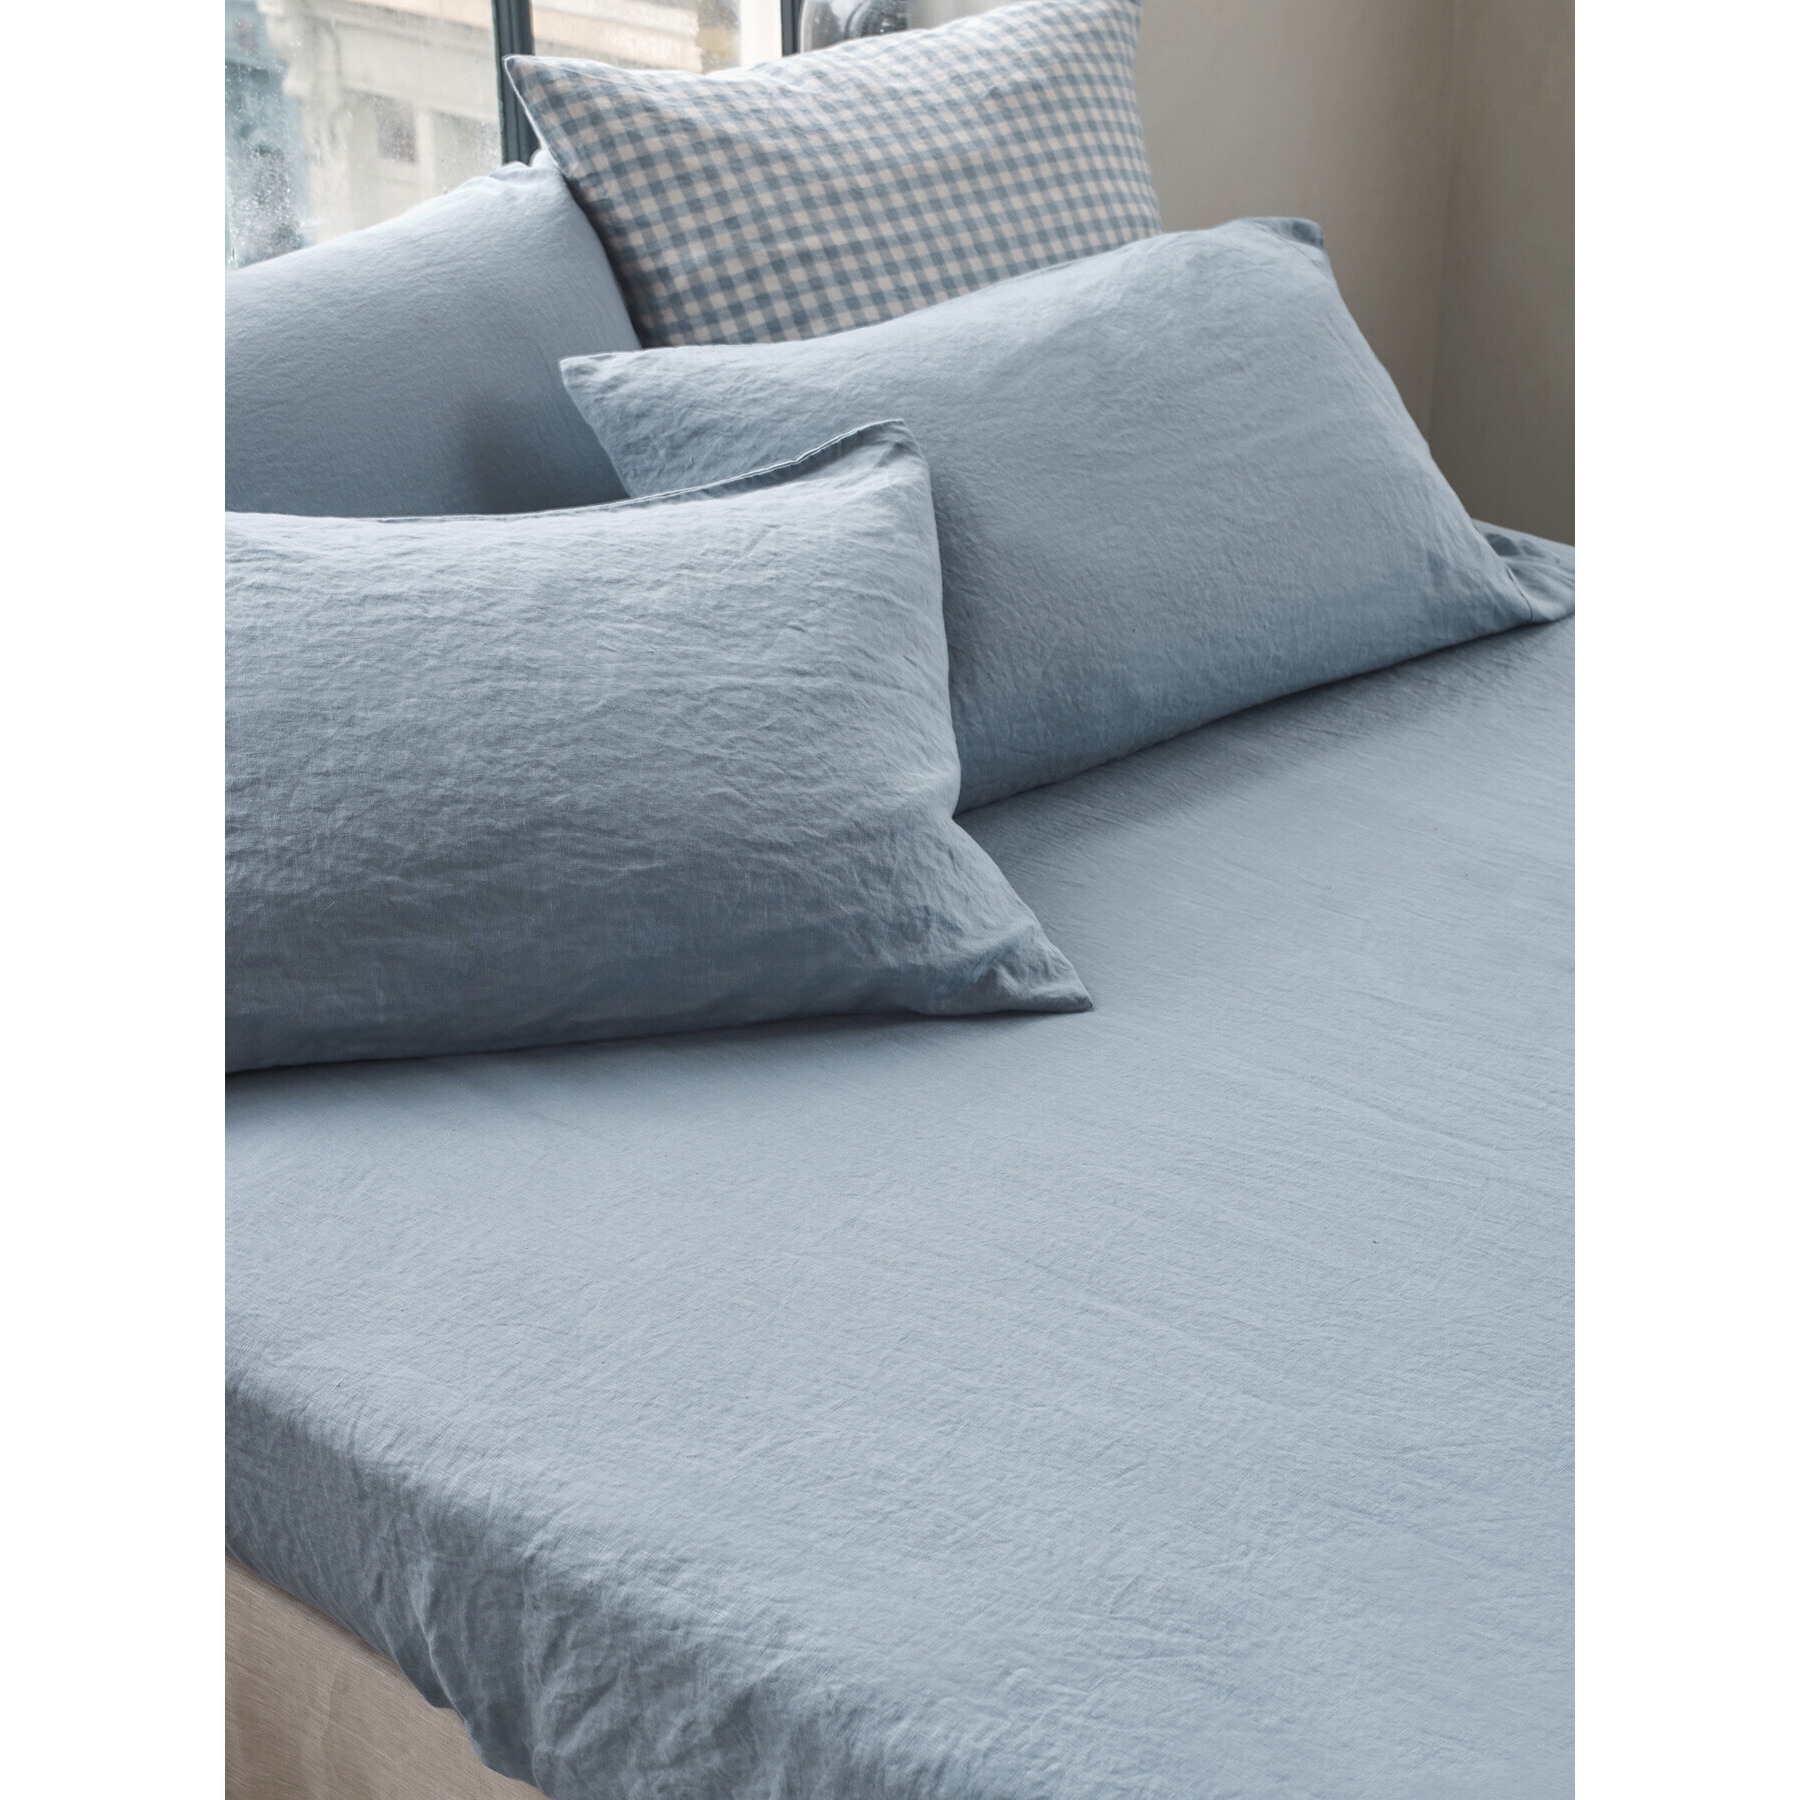 Piglet in Bed Linen Fitted Sheet - Size Super King Blue - image 1